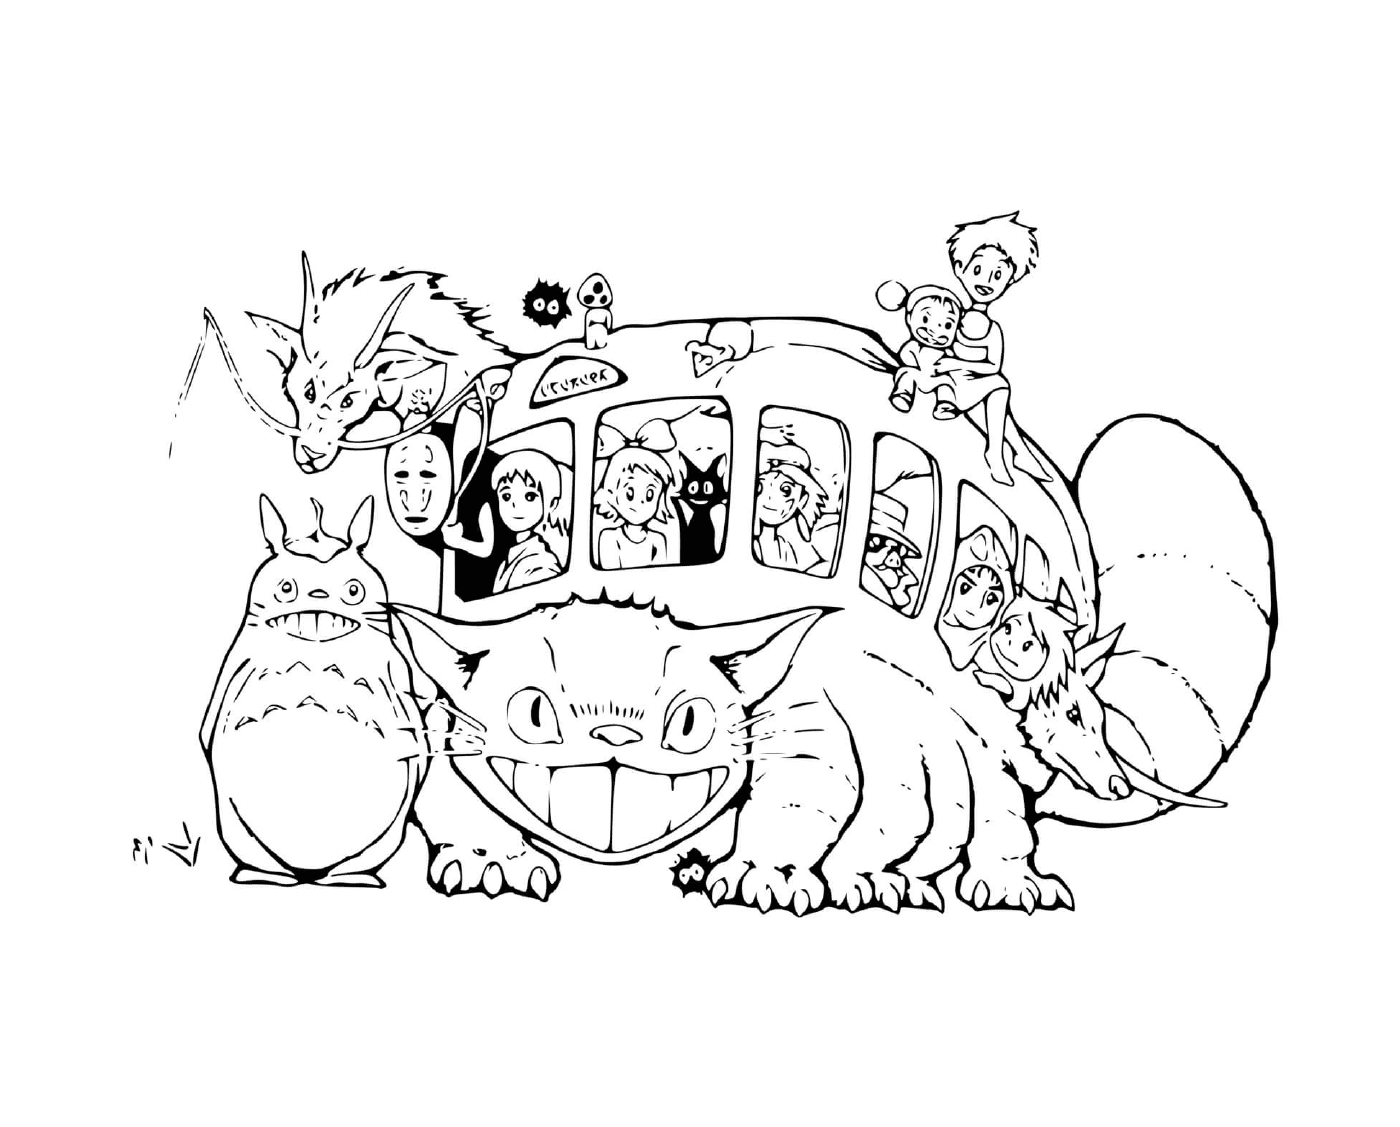  Cat-shaped bus by Studio Ghibli 